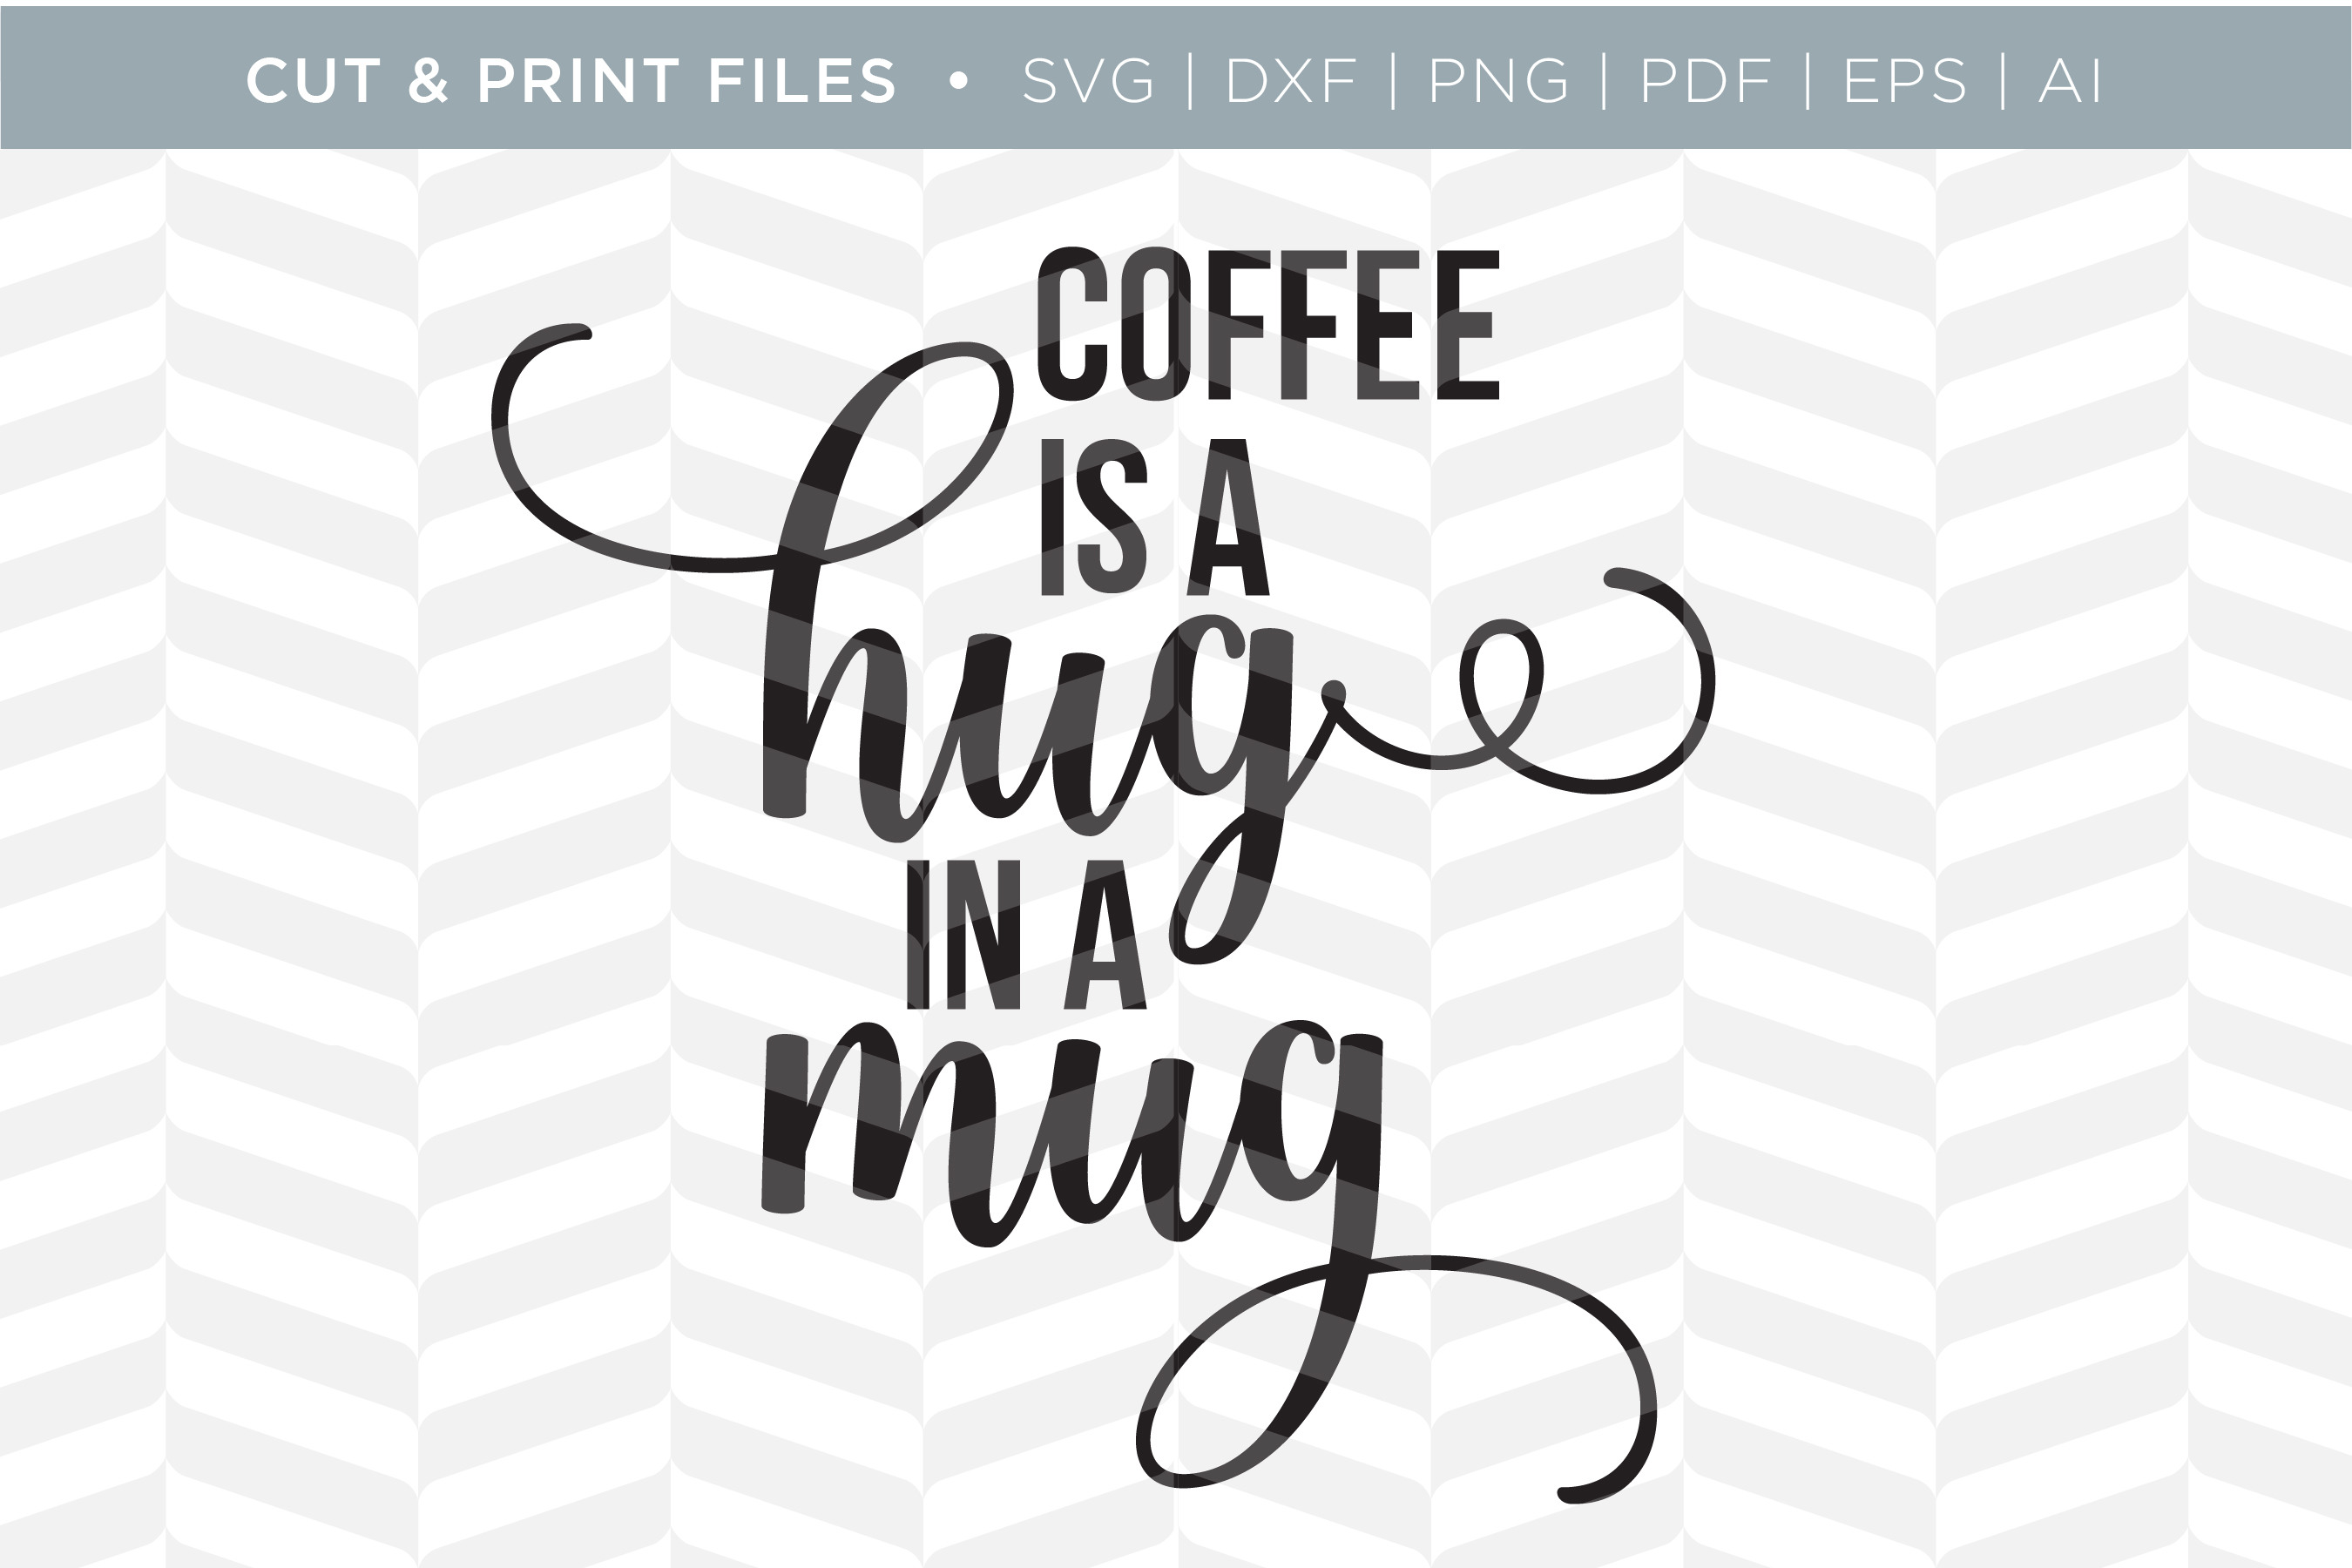 Download Hug in a Mug SVG Cut/Print Files ~ Illustrations ~ Creative Market